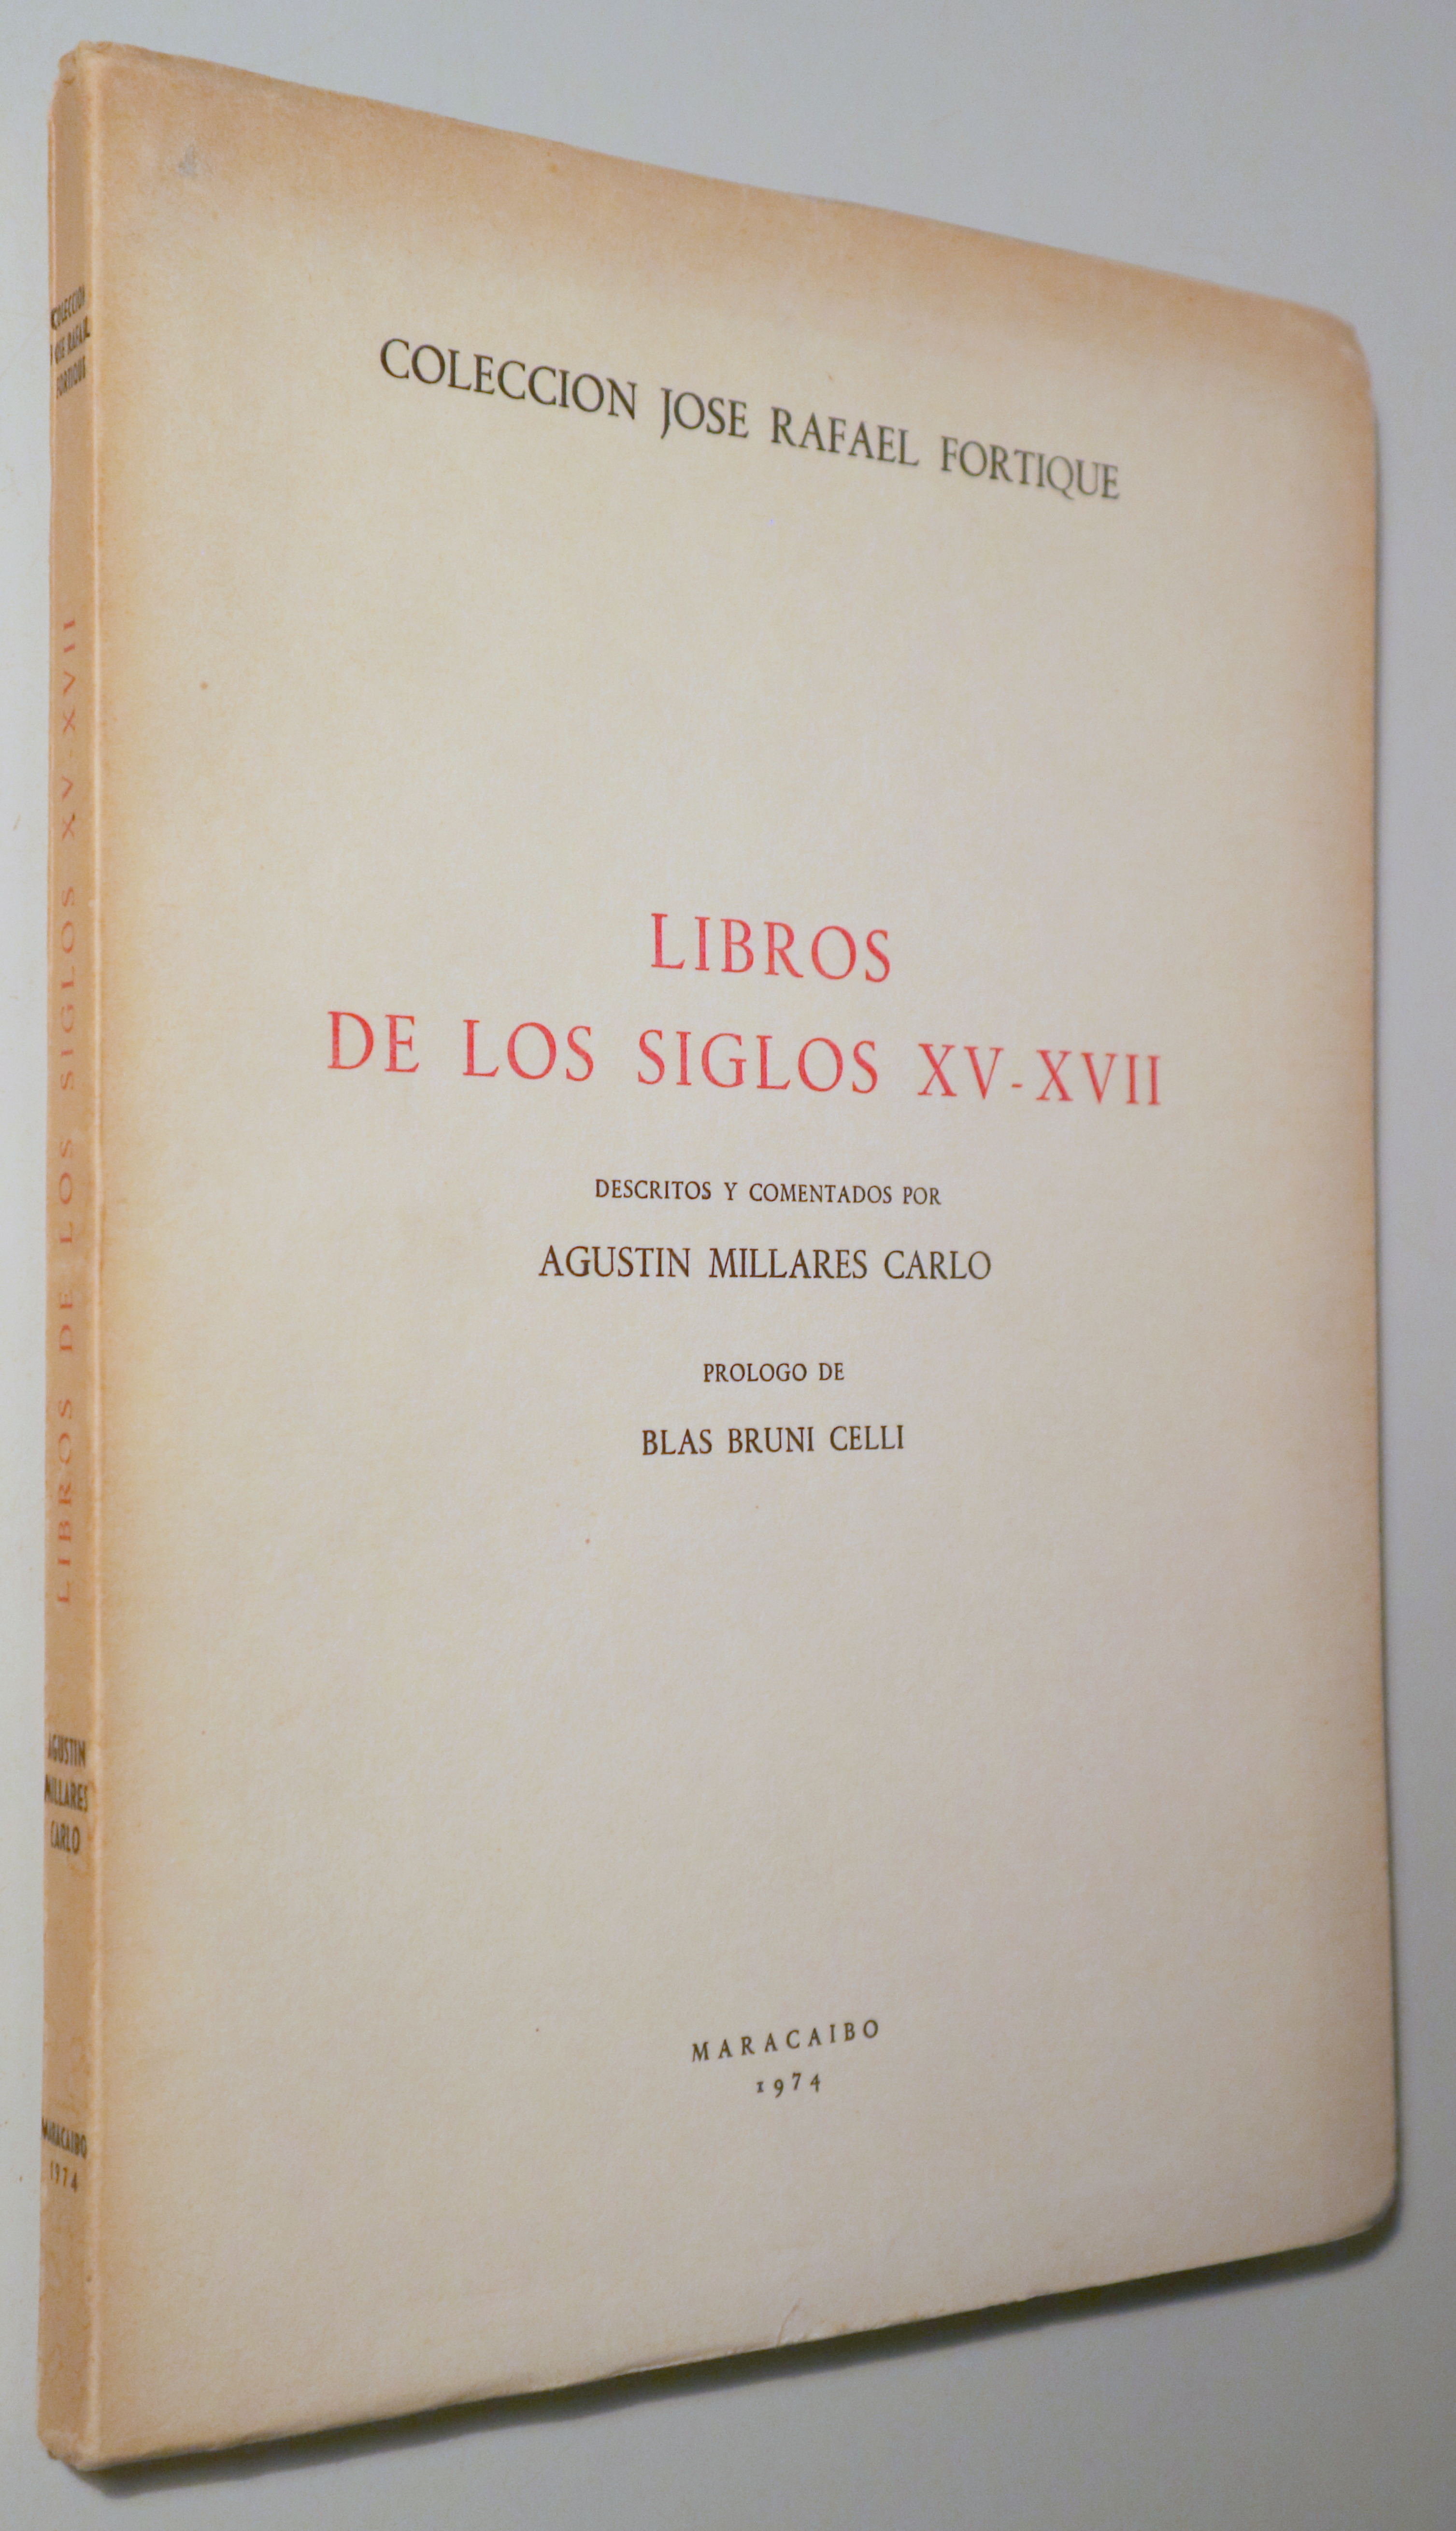 LIBROS DE LOS SIGLOS XV-XVII - Maracaibo 1974 - Láminas